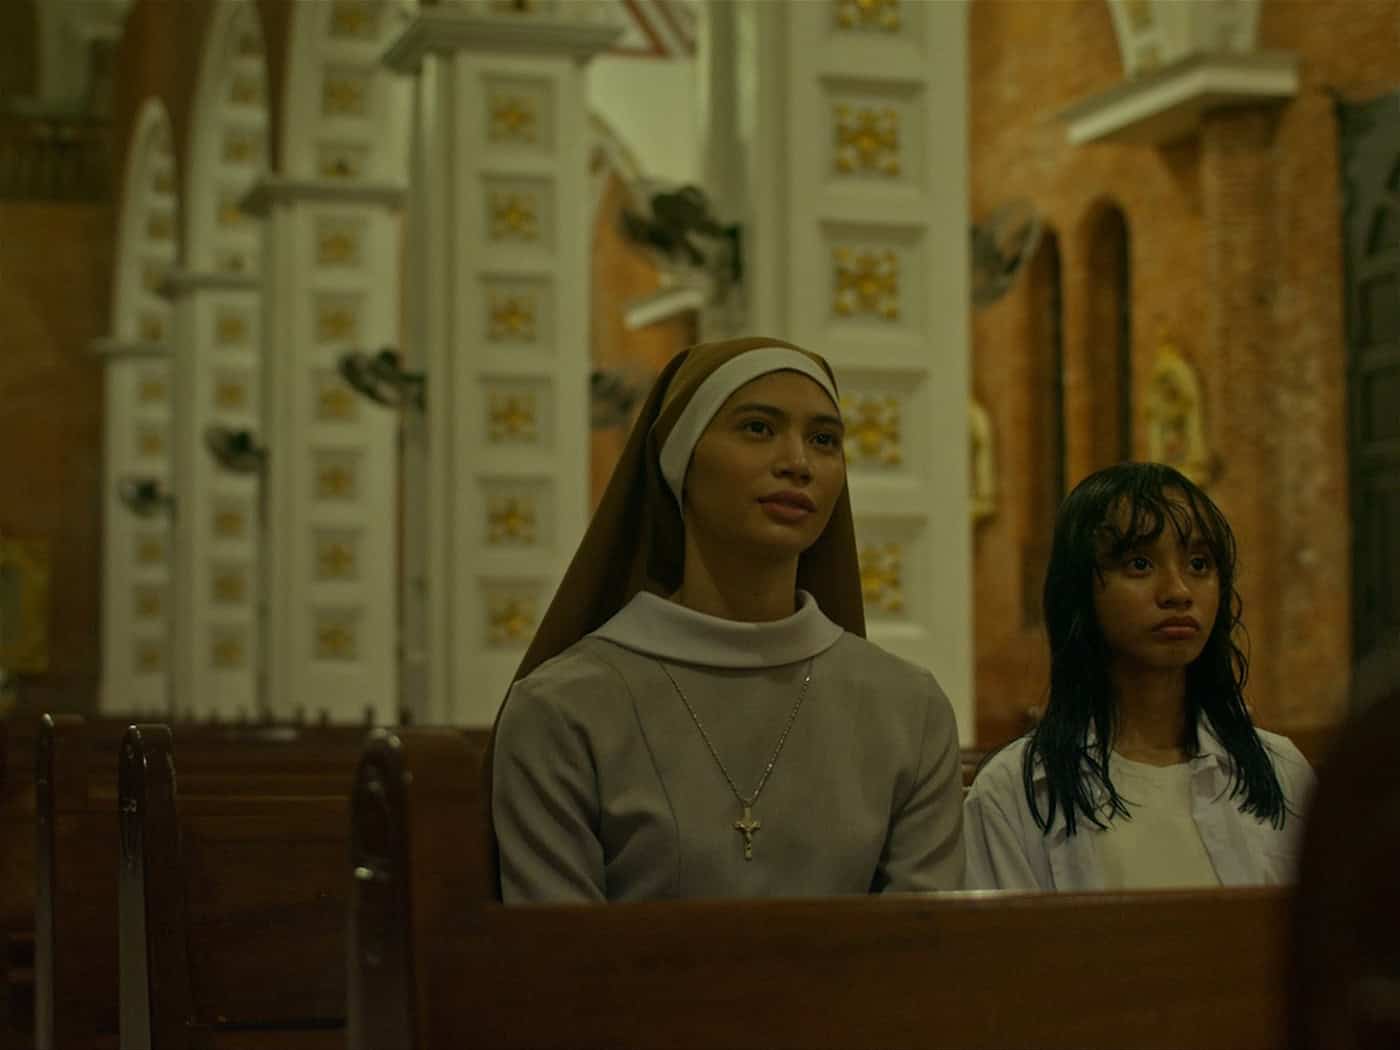 Short Film Review: A Catholic Schoolgirl by Myra Angeline Soriaso